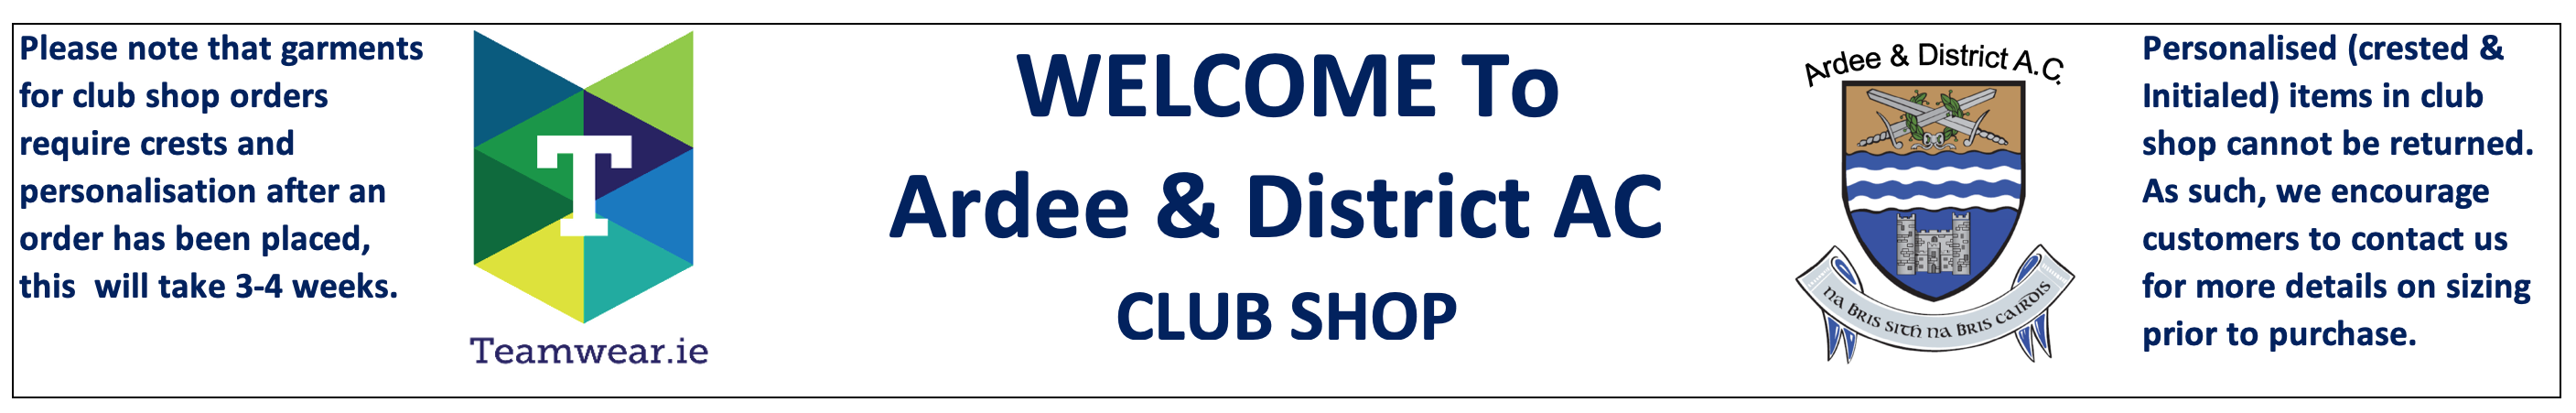 Ardee & District AC Club